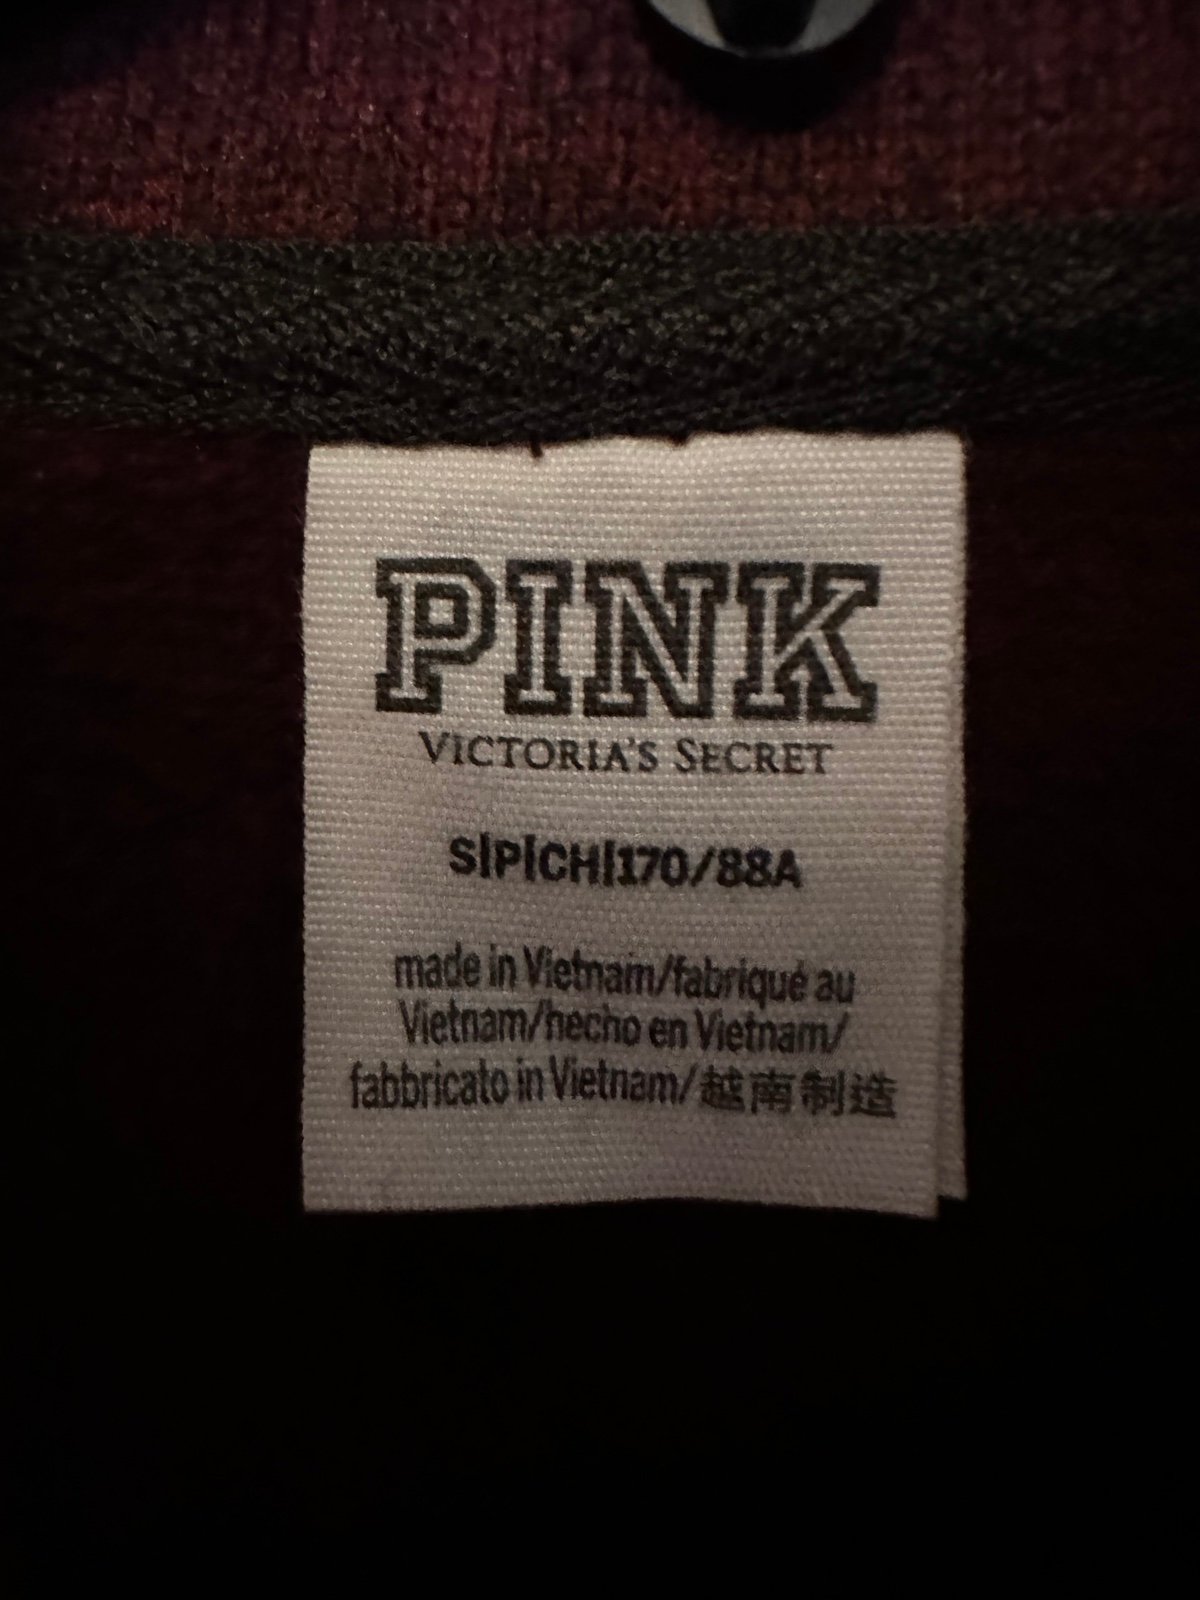 Great Pink Victoria’s Secret  maroon 1/4 zip up sweatshirt size small onDAb0oEp Cool